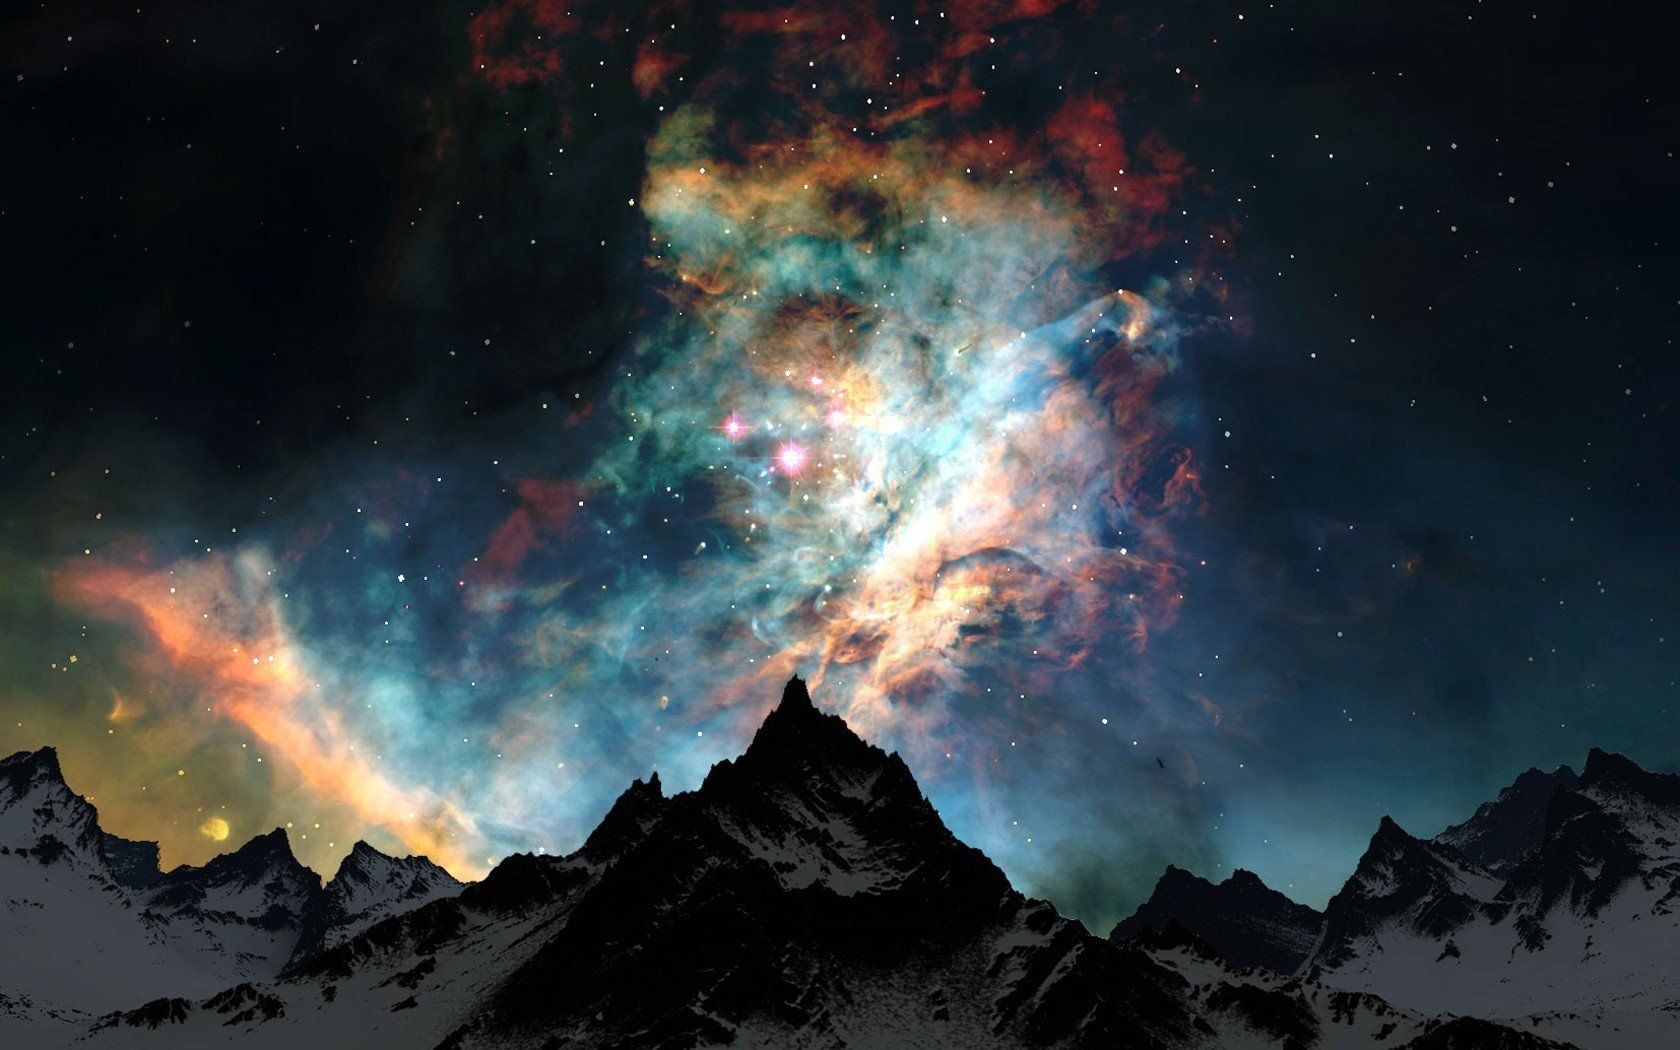 space, Stars, Nebula, Galaxy, Mountains, Snowy peak, Space art